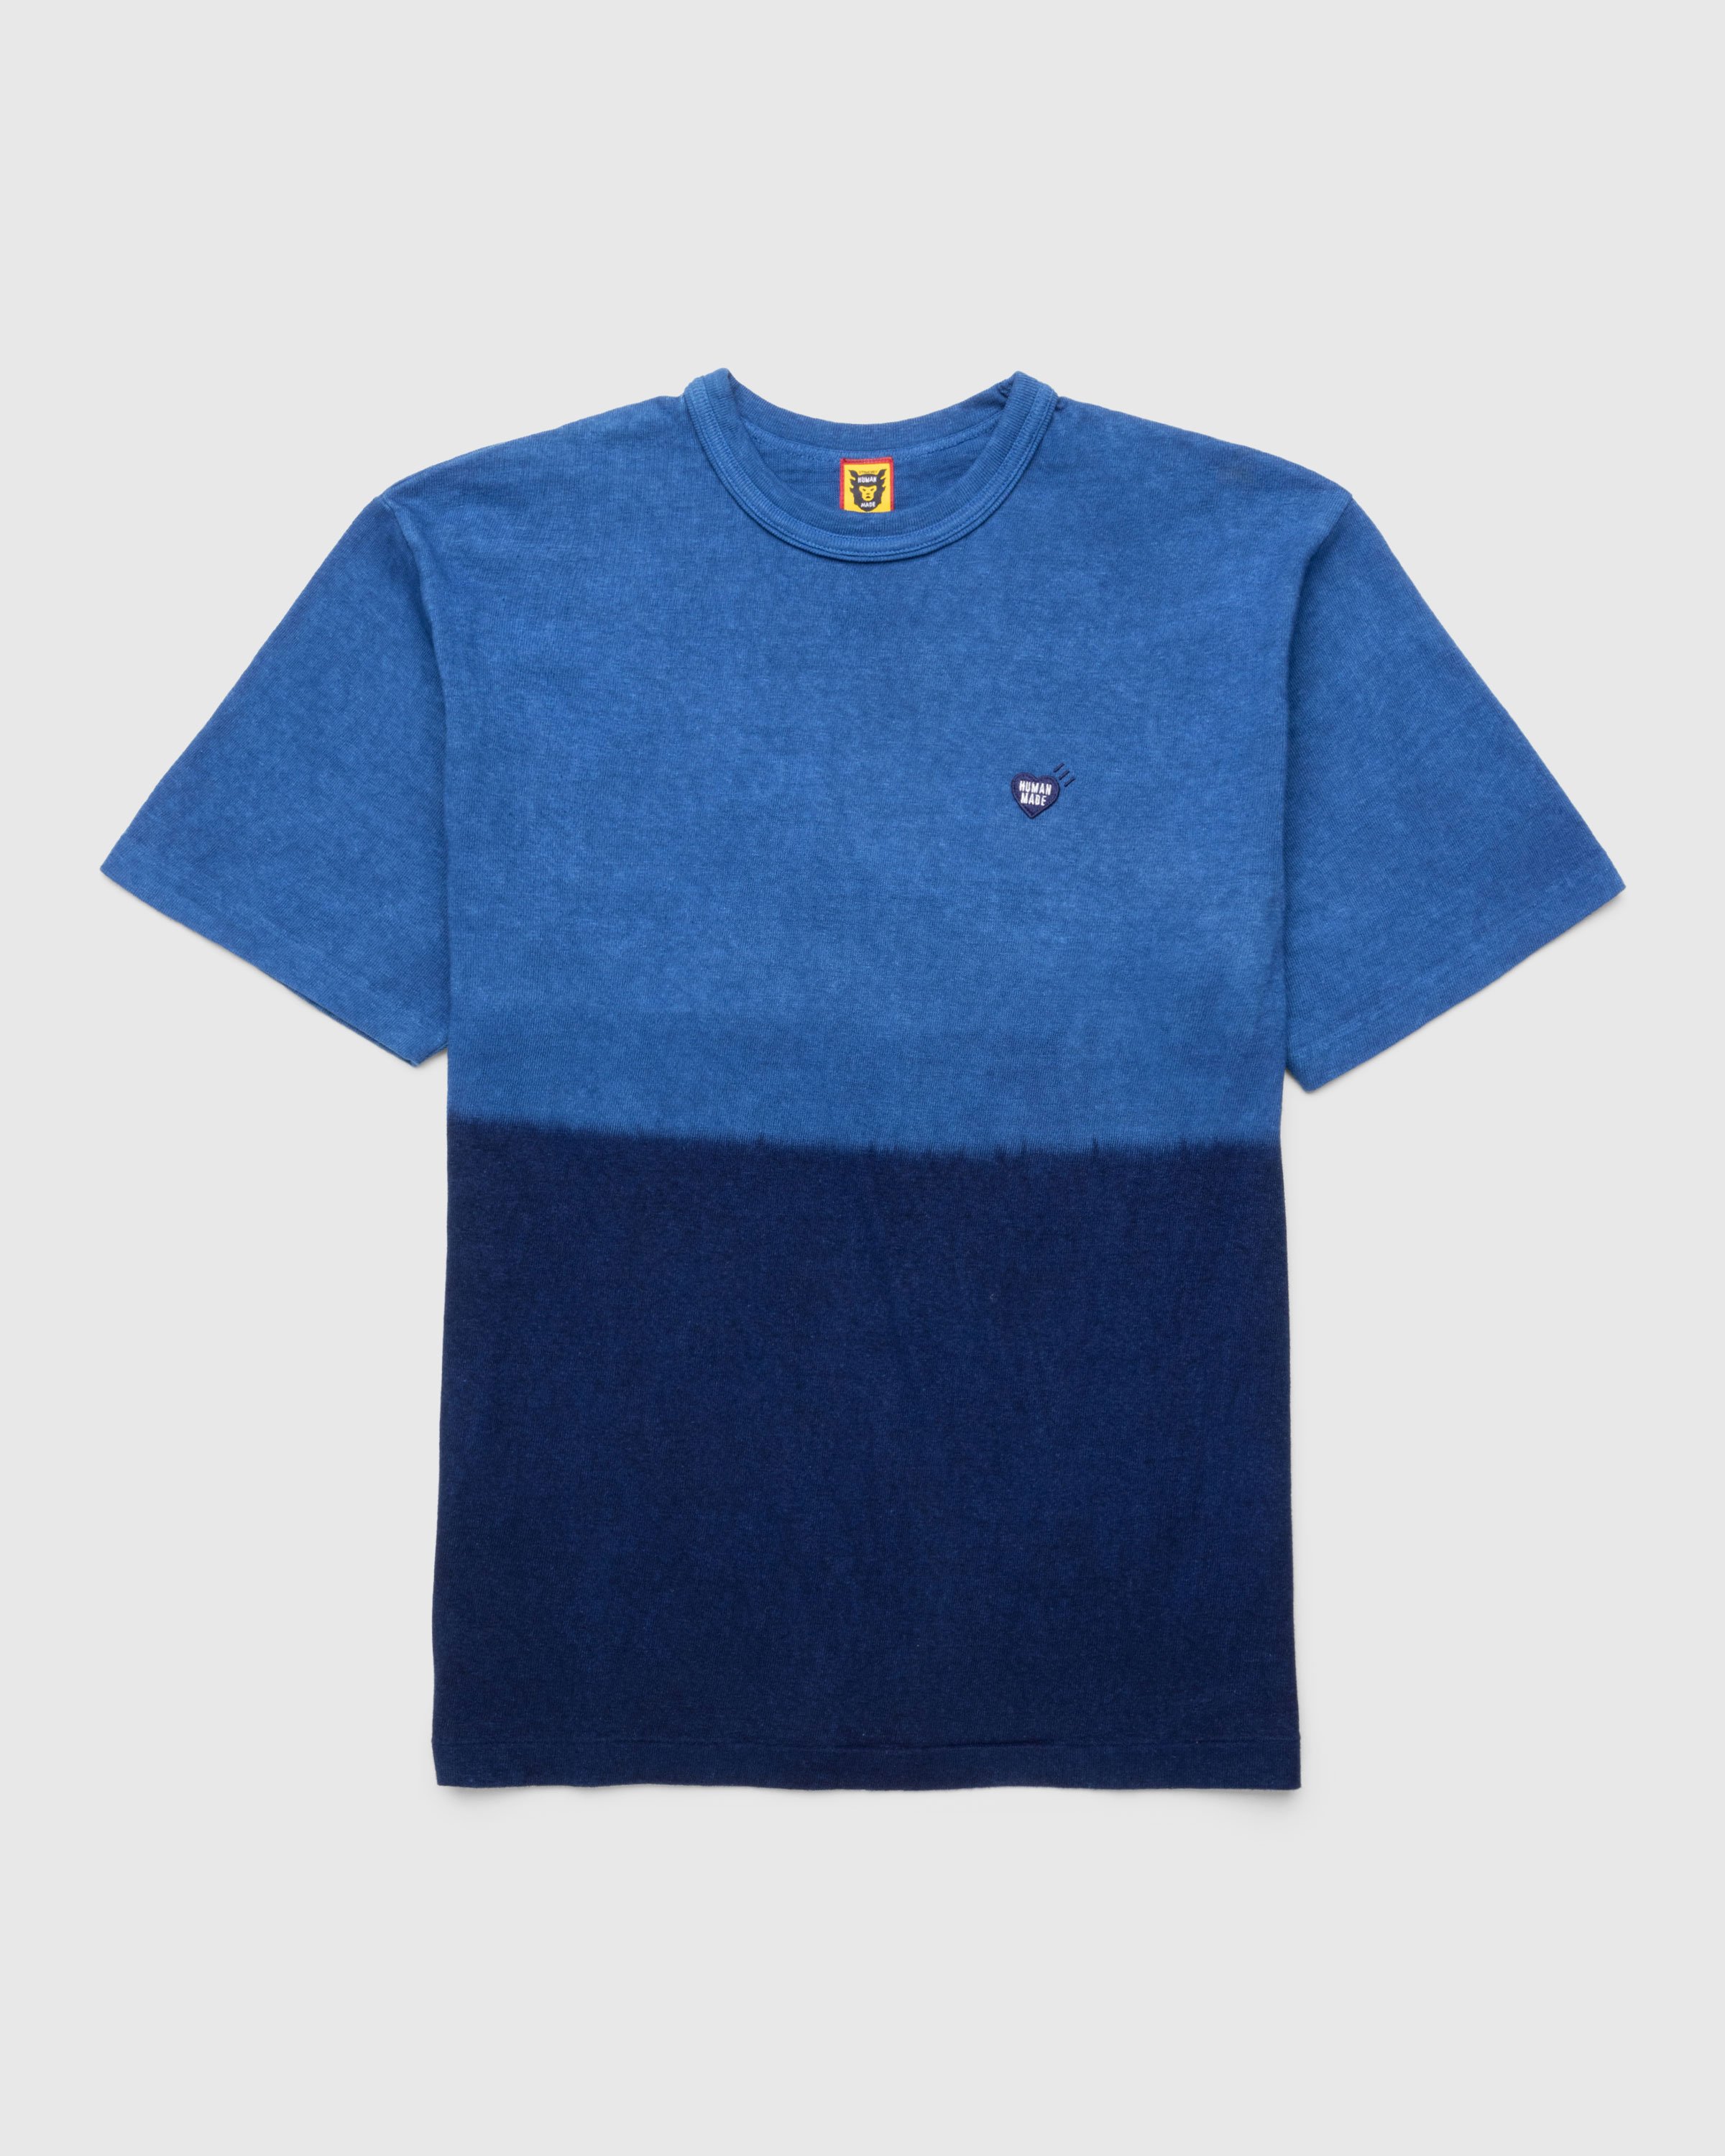 Human Made – Ningen-sei Indigo Dyed T-Shirt #2 Blue | Highsnobiety Shop